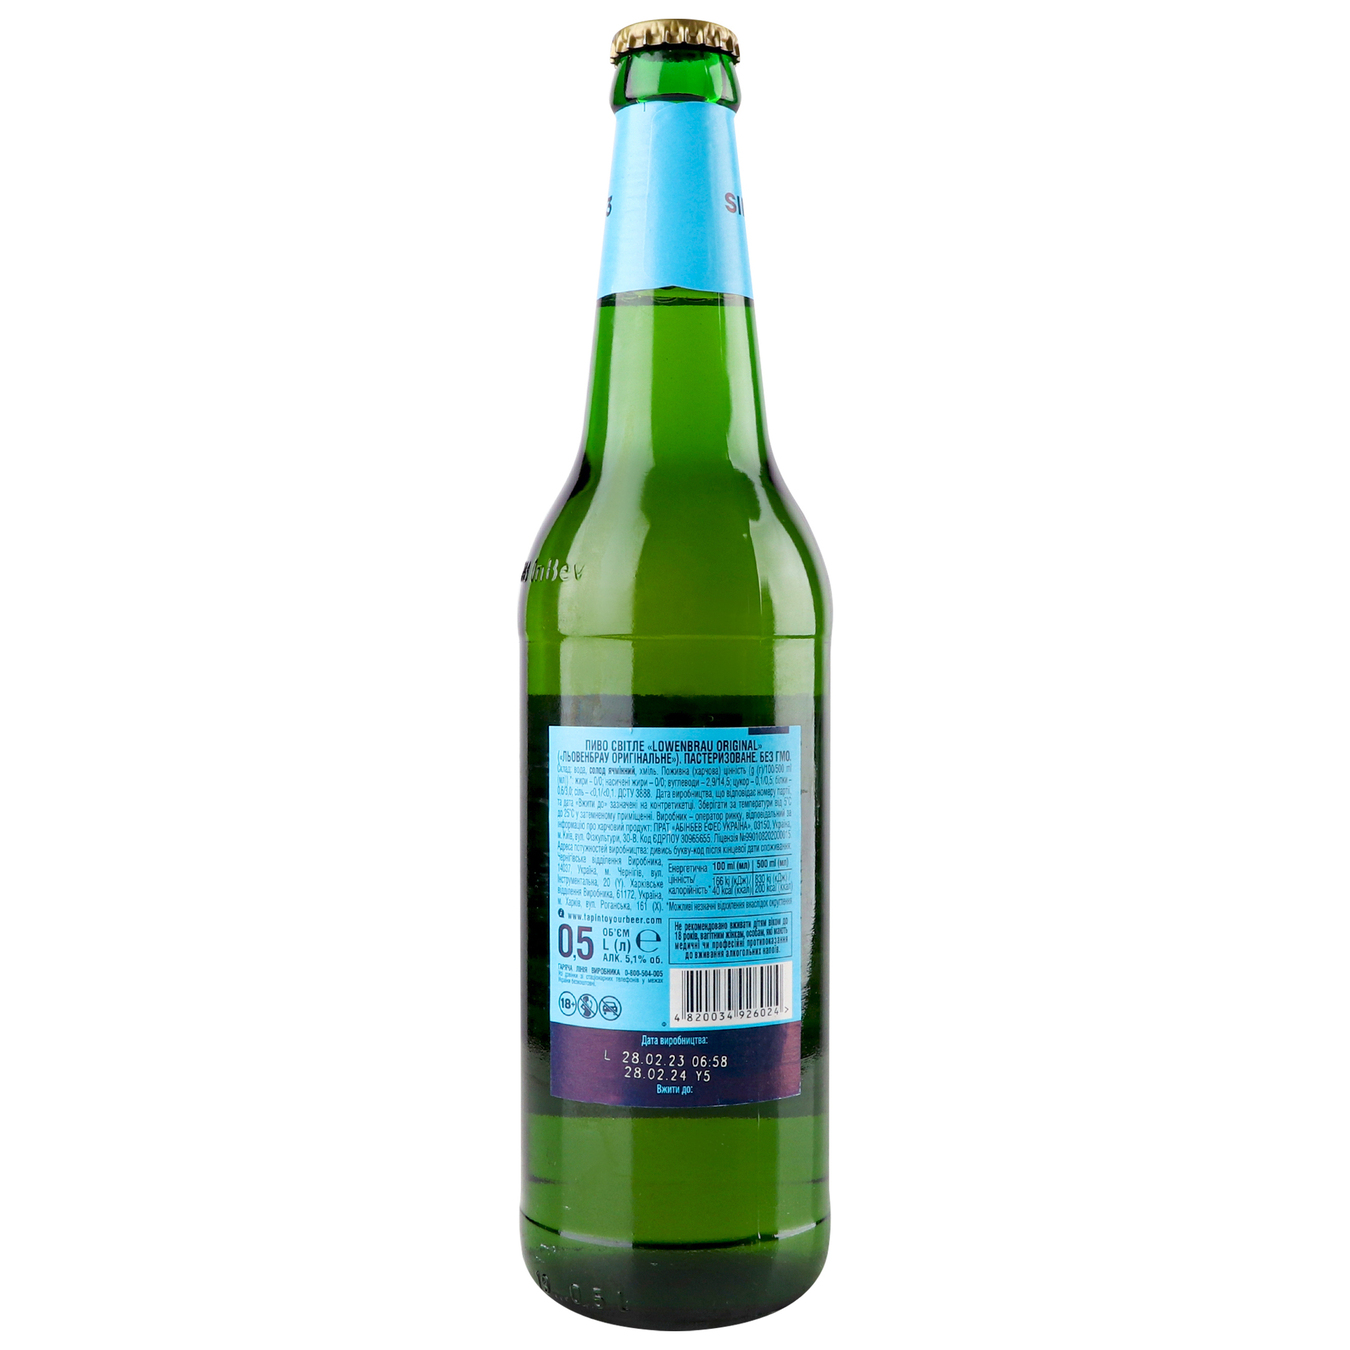 Beer Lowenbrau Original light pasteurized 5.1% 0.5l glass bottle 2